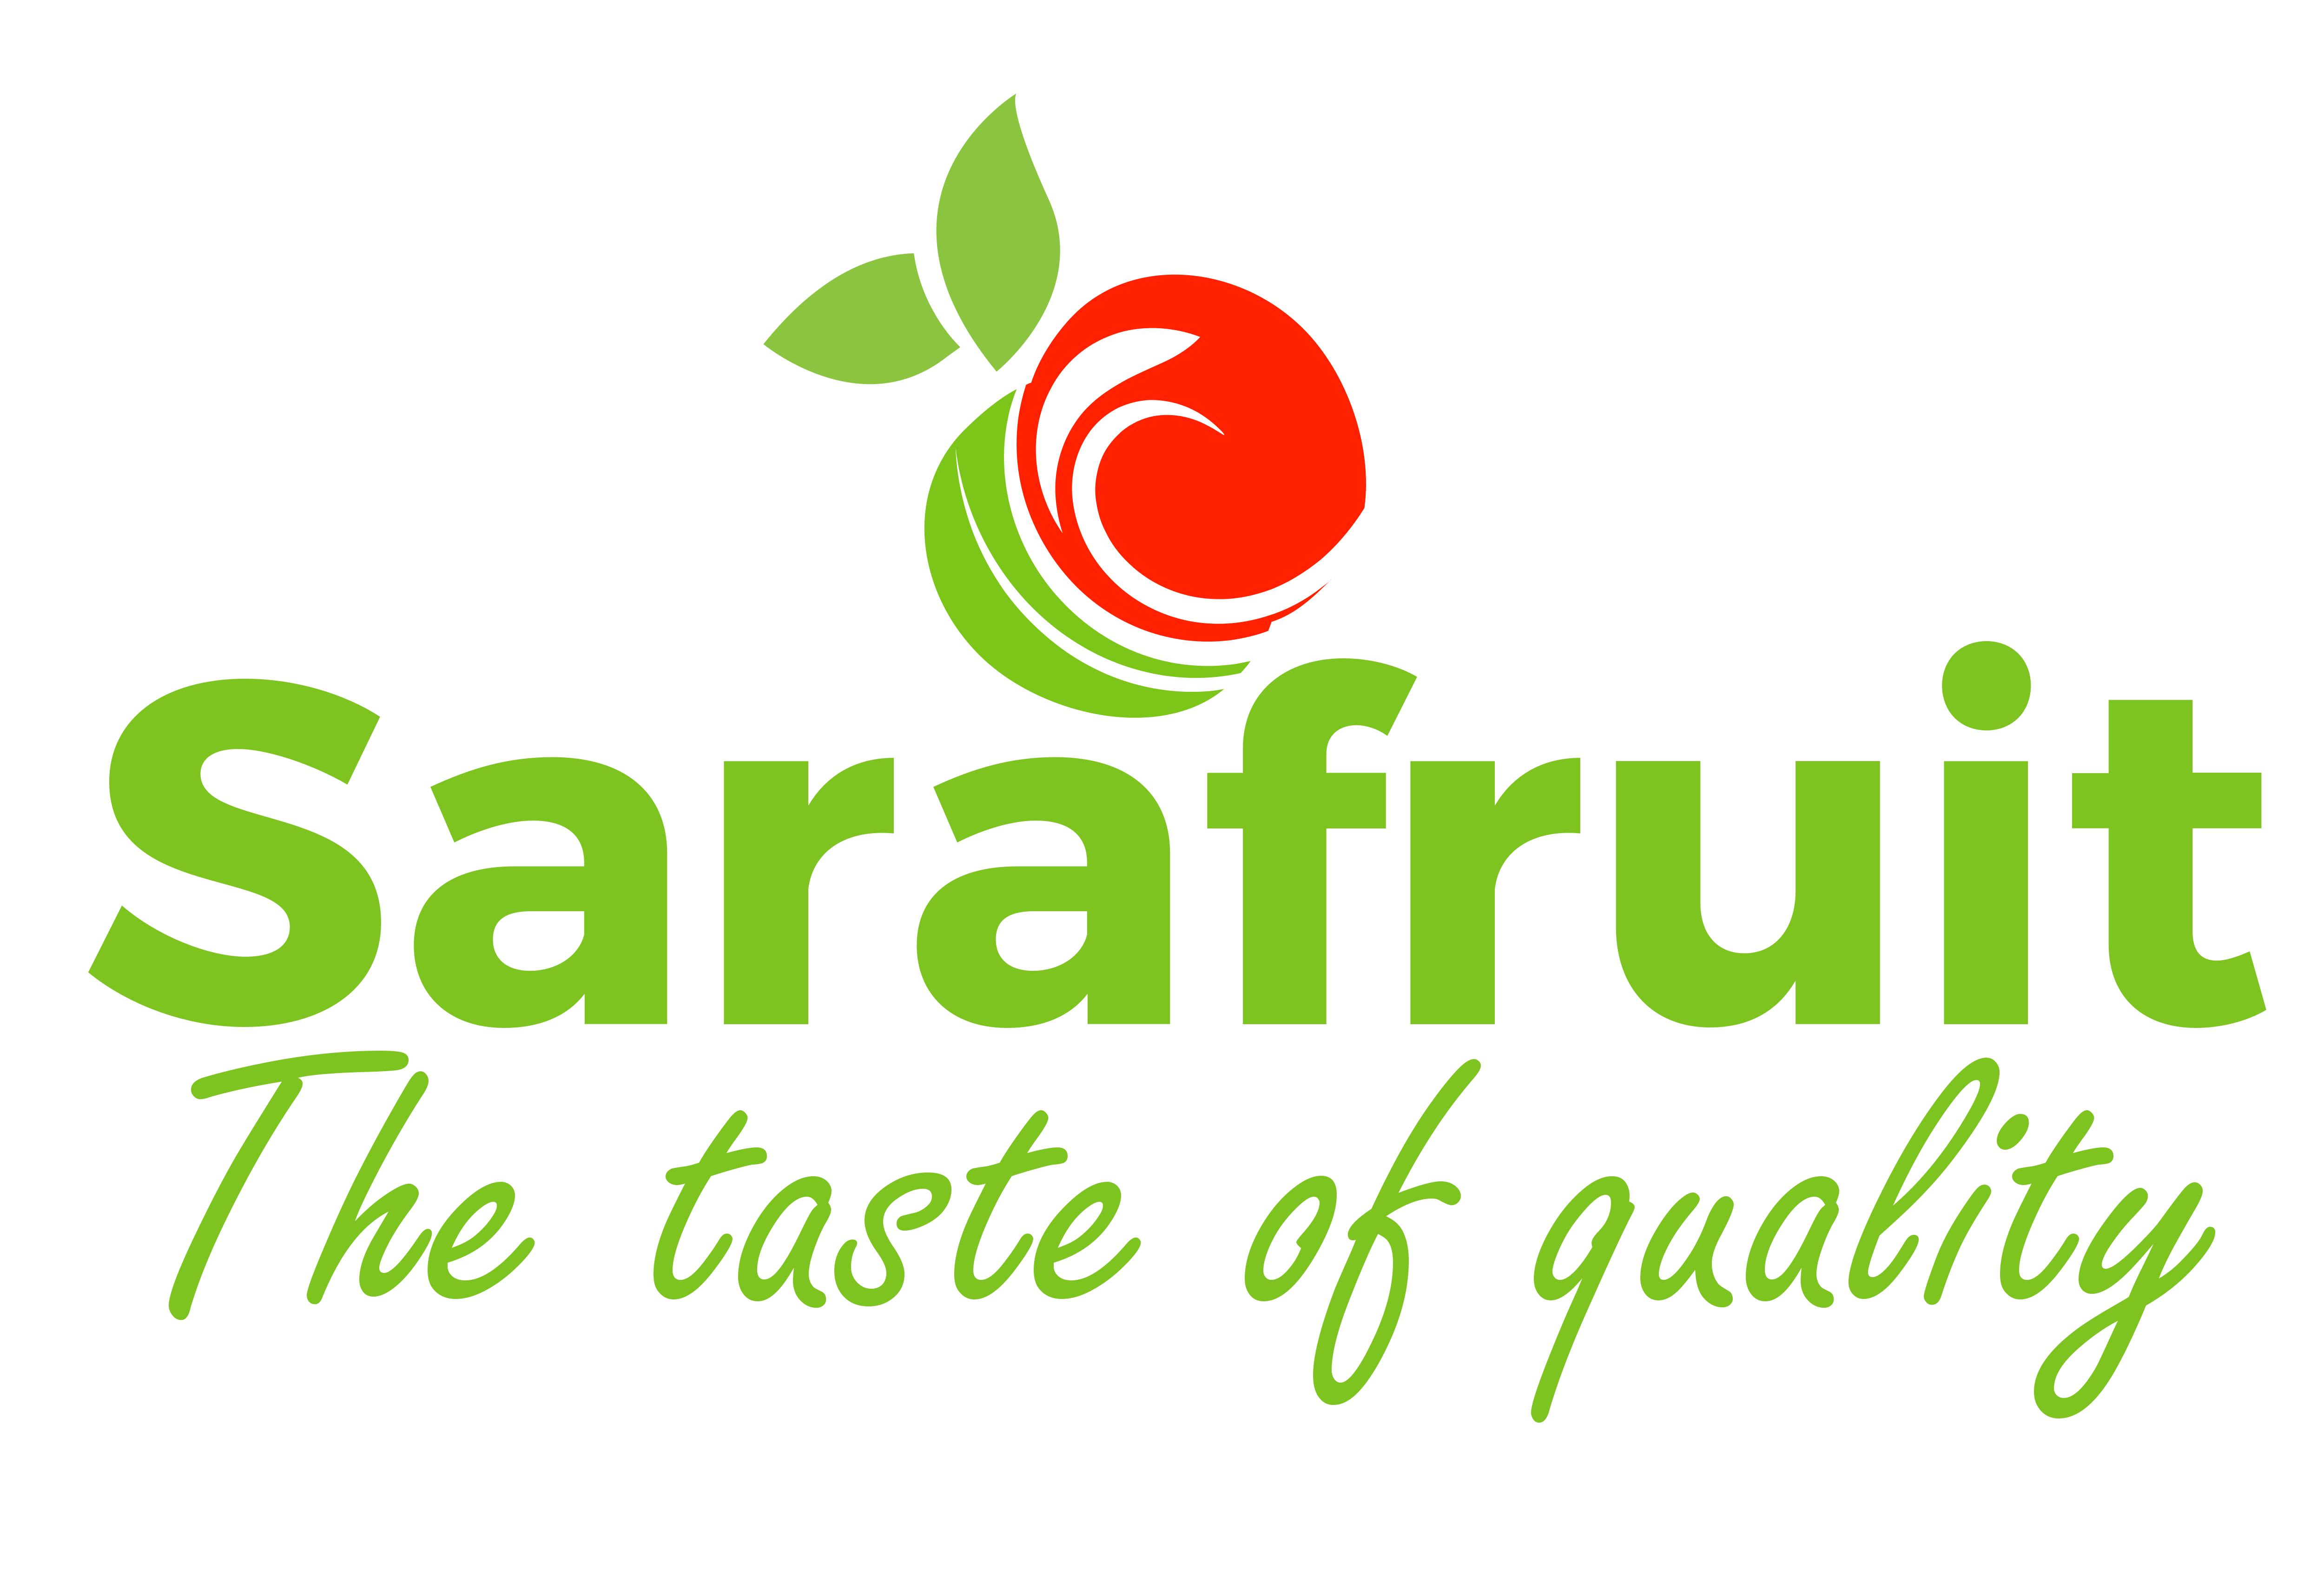 Sarafruit